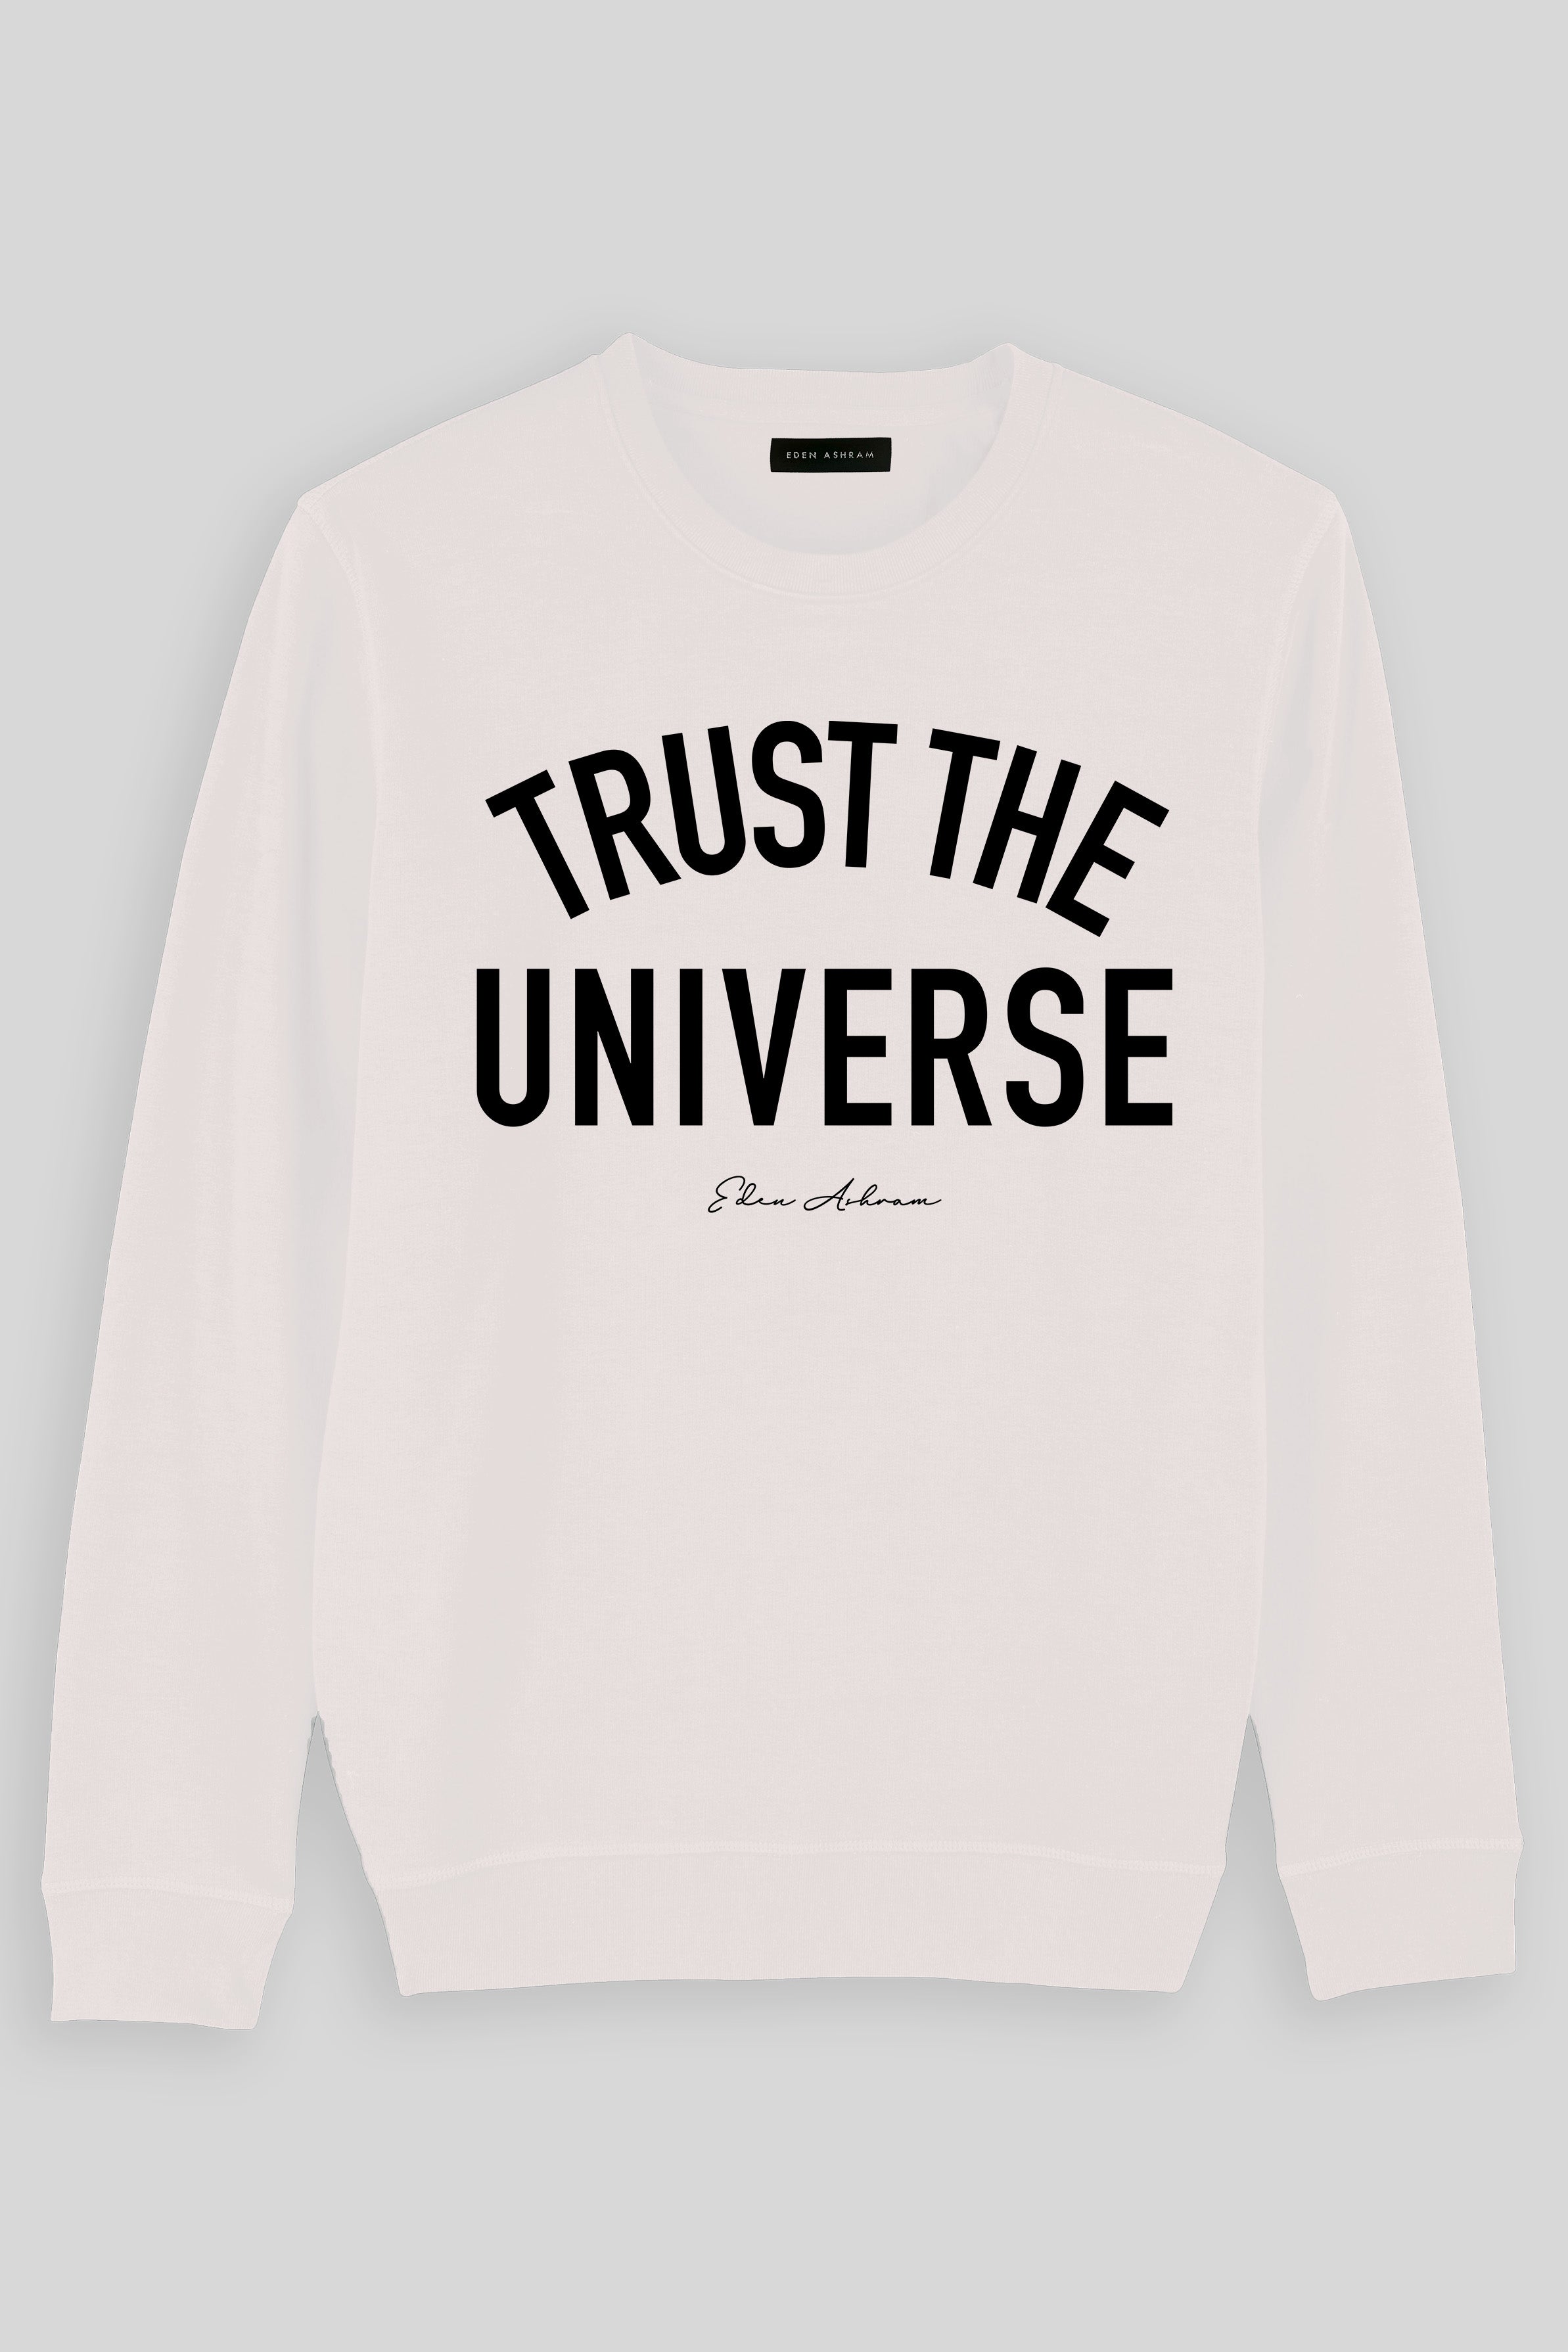 EDEN ASHRAM Trust The Universe Premium Crew Neck Sweatshirt Vintage White